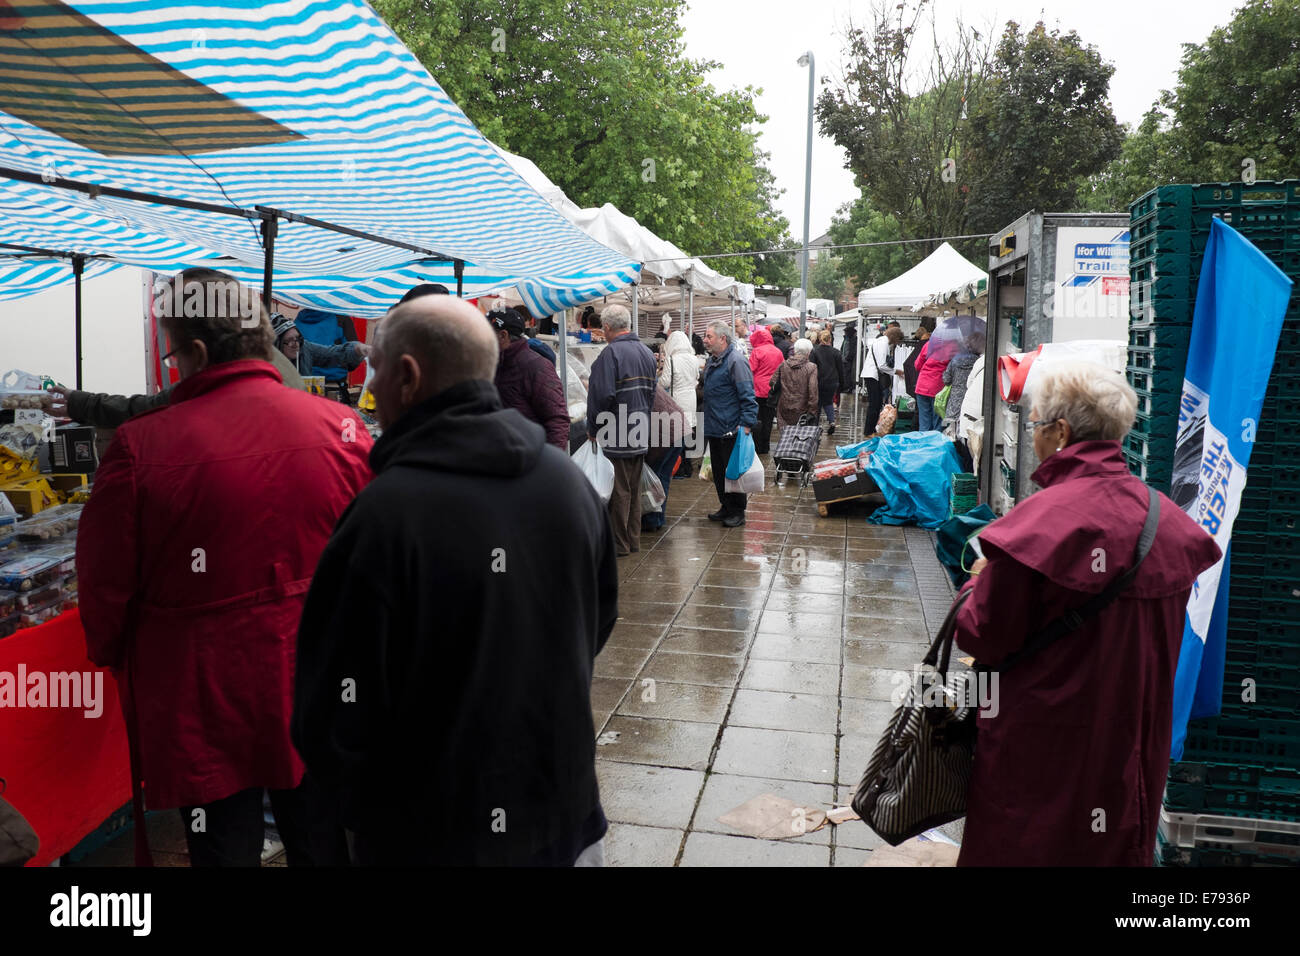 Wet Windy Raining Farmers Market Stalls Shopping Stock Photo